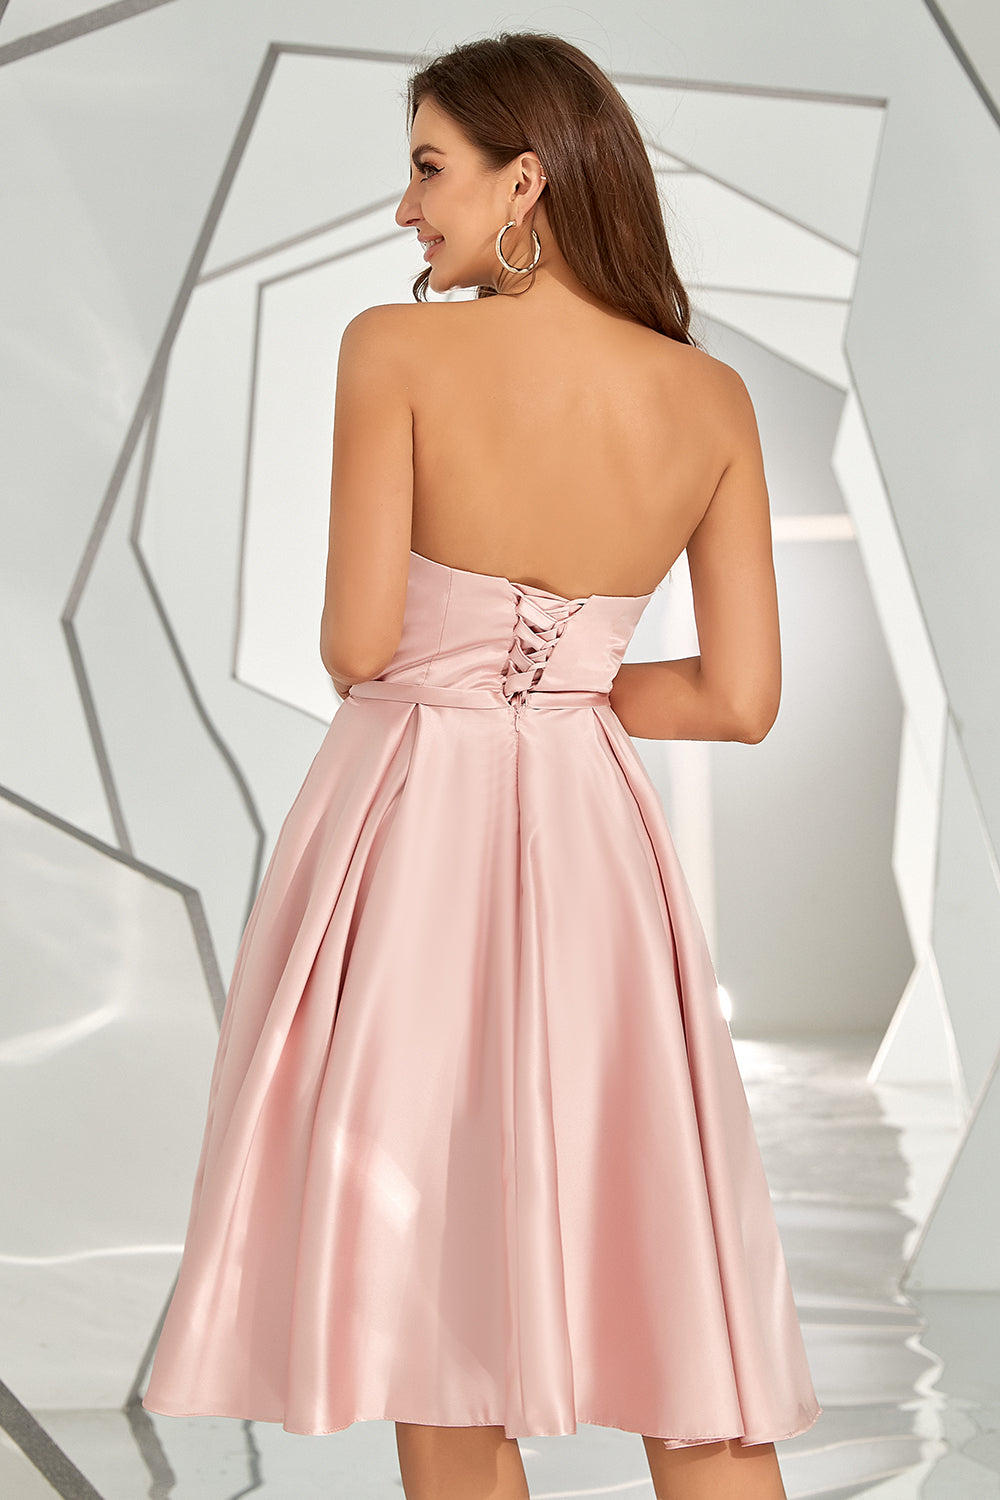 Blush Sweetheart A-Line Cocktail Dress